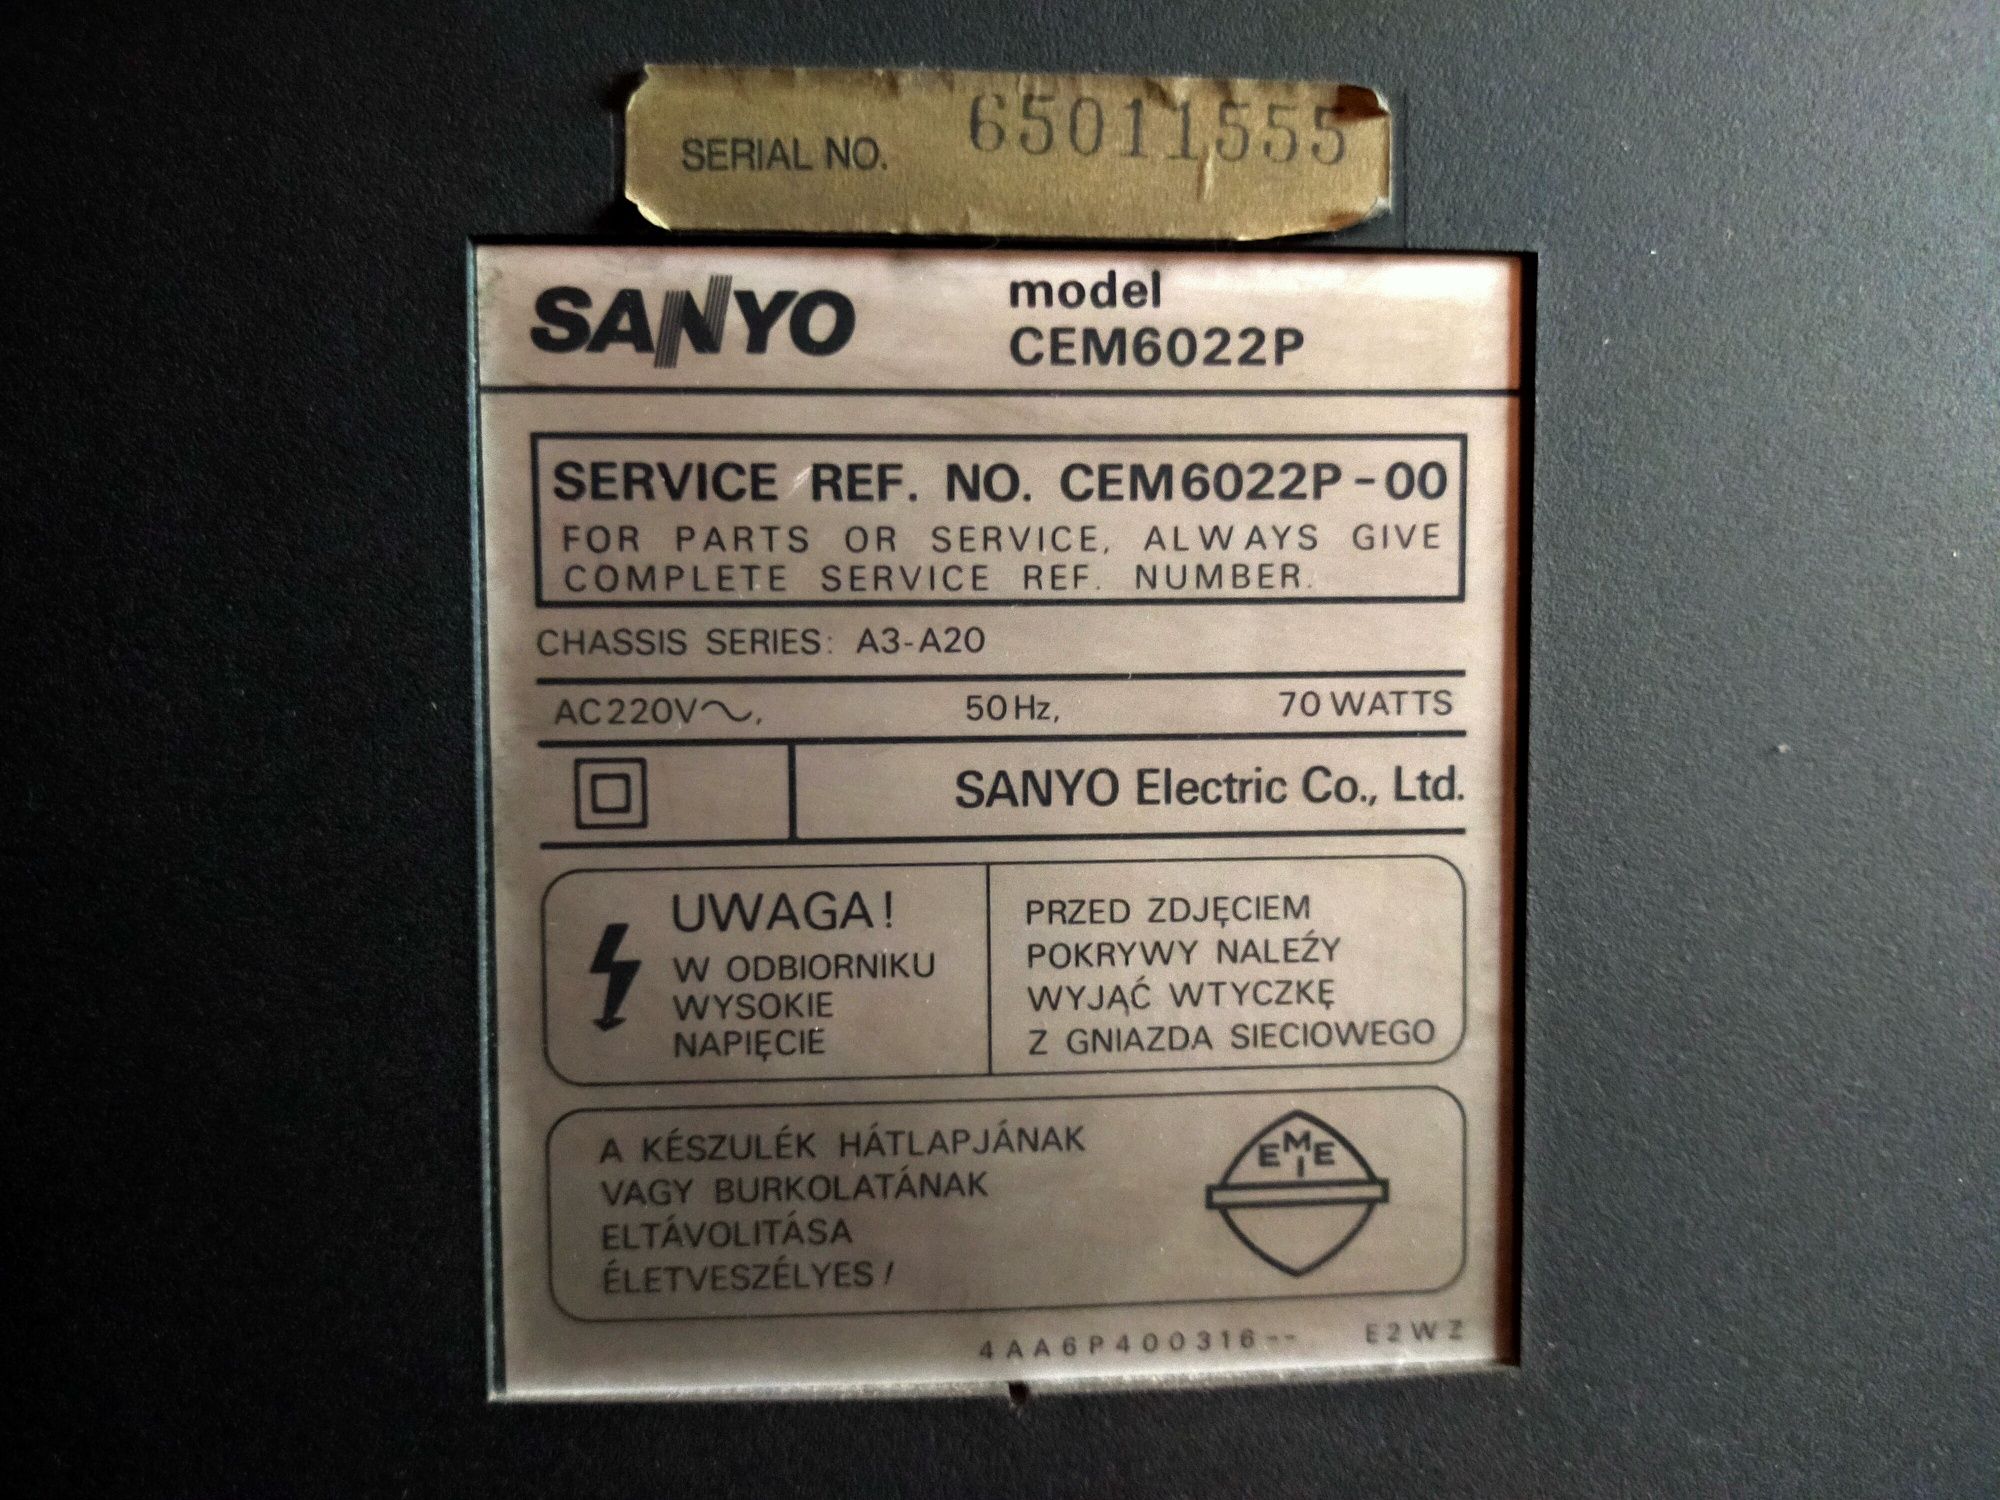 Telewizor Sanyo 21 cali oraz magnetowid